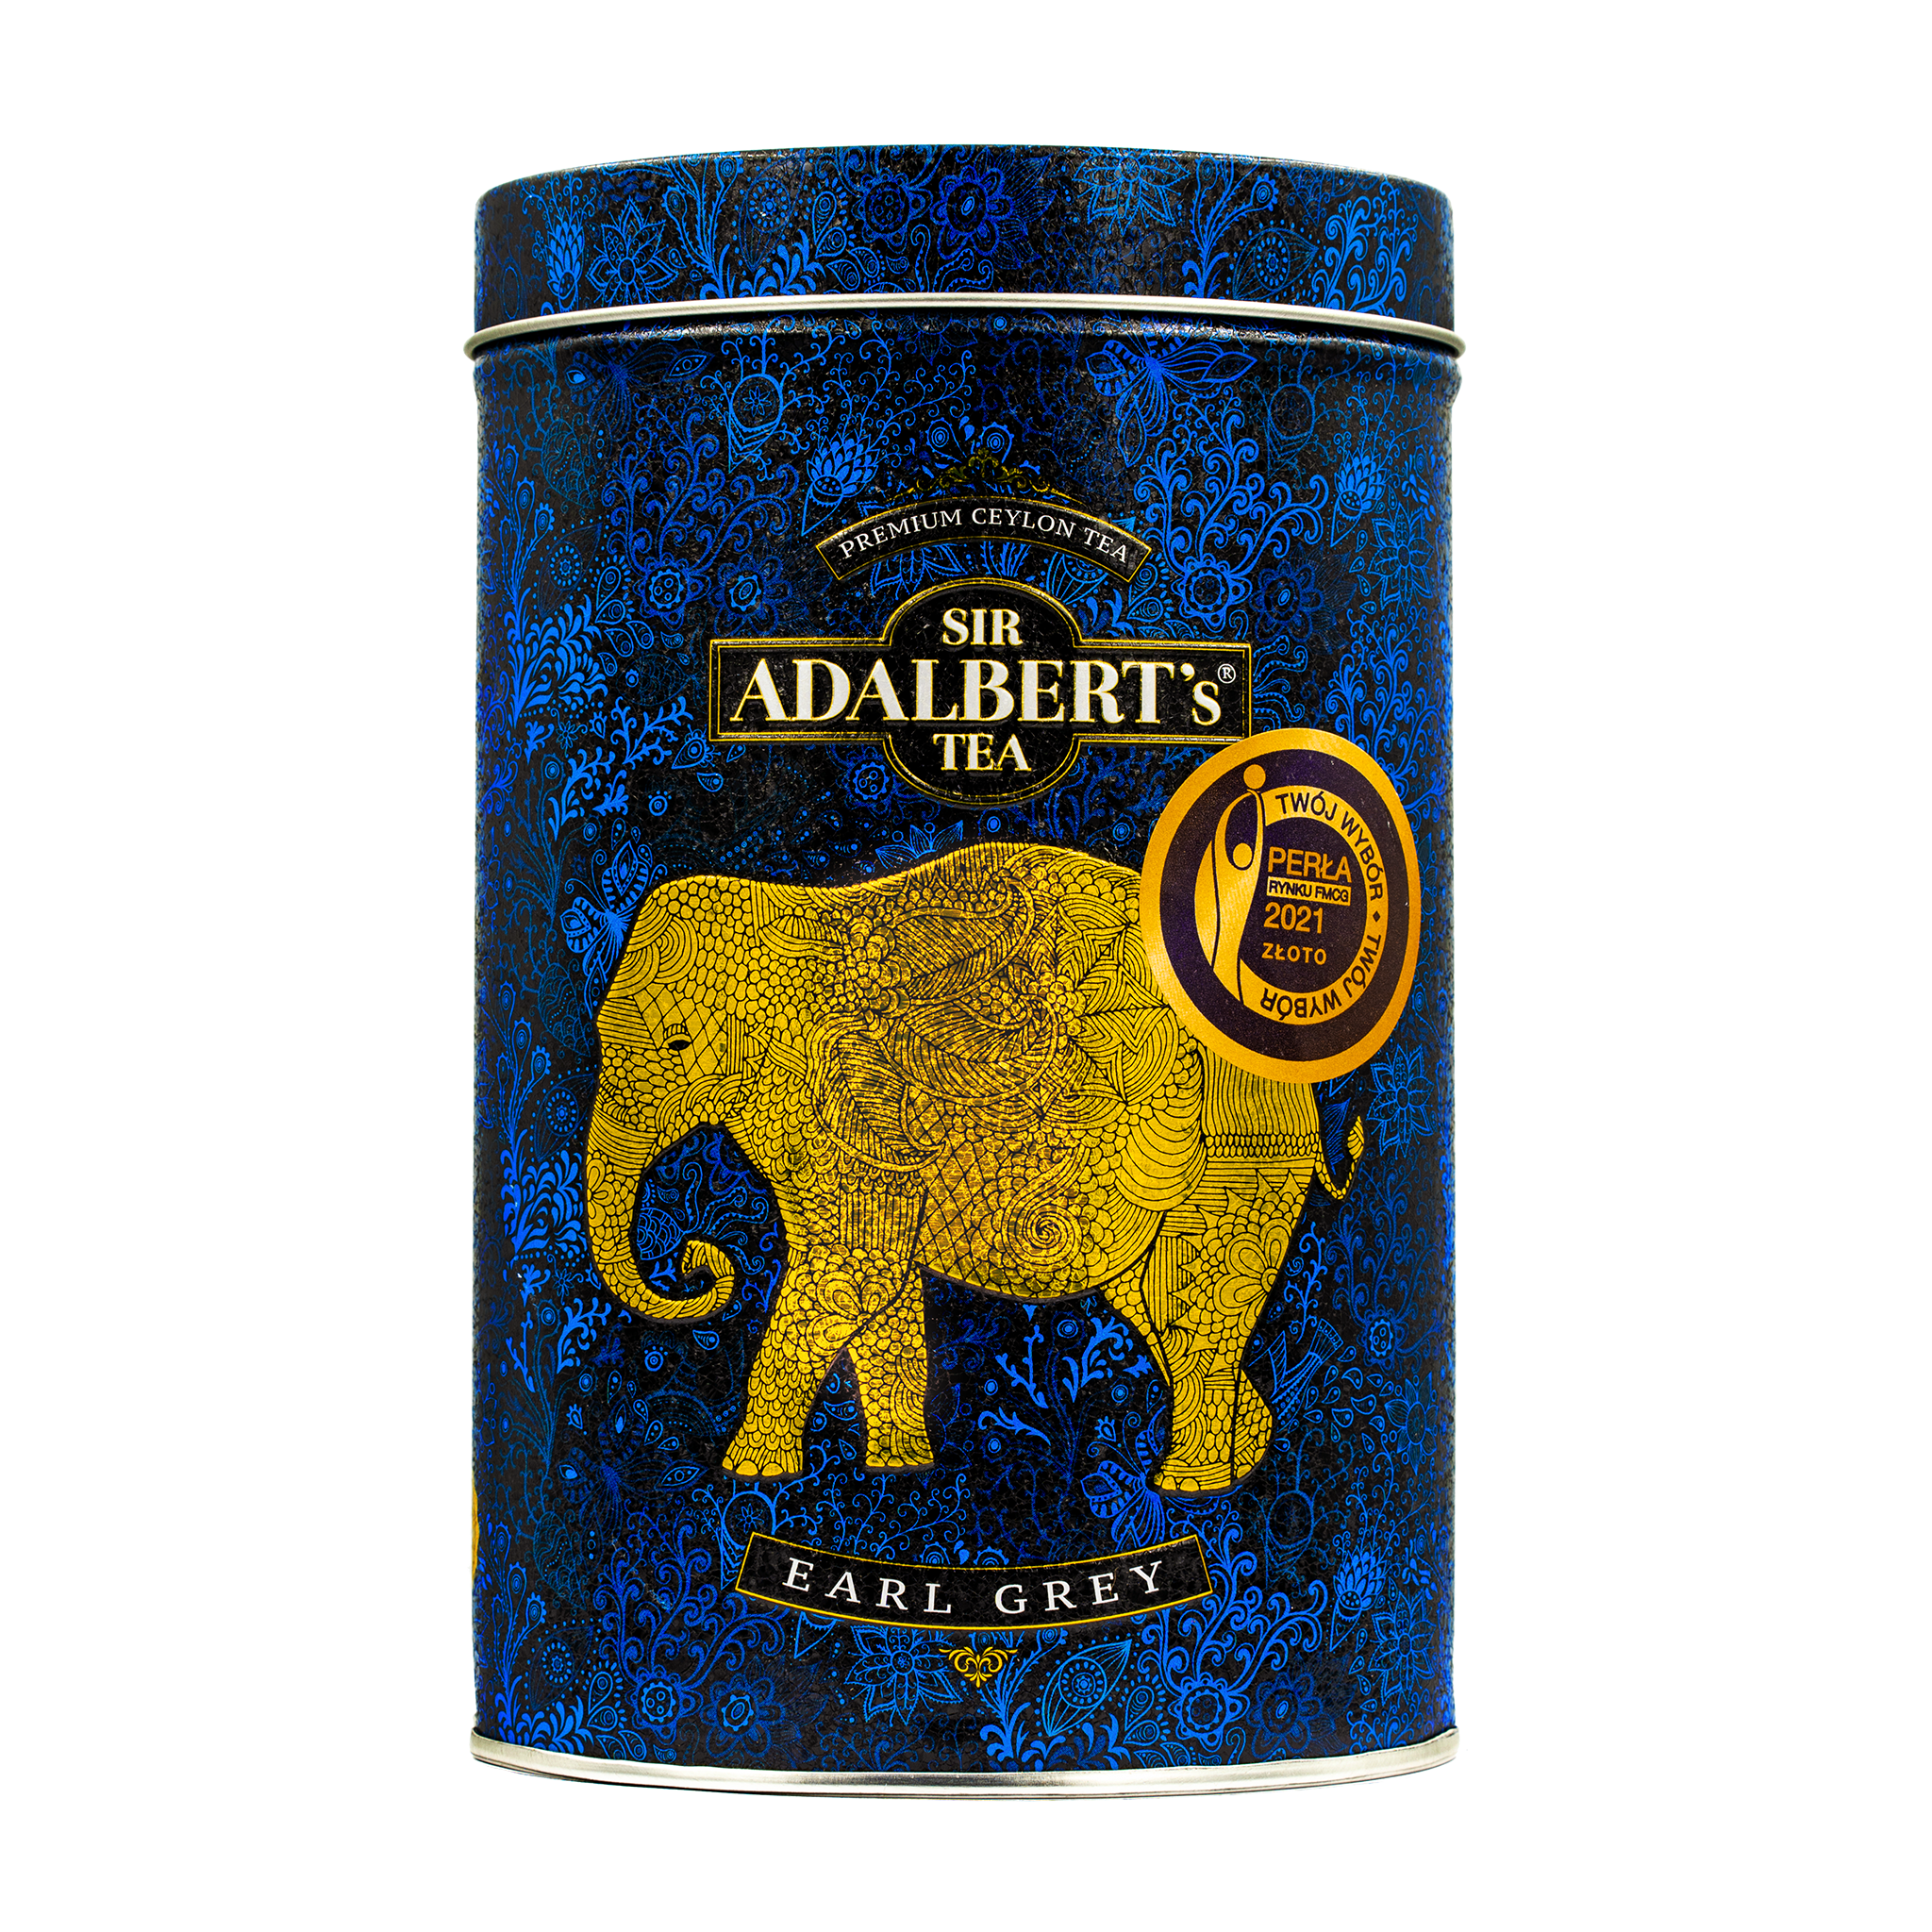 Adalbert's Tea EARL GREY - Liściasta 110g w puszce - Sir Adalbert's Tea front